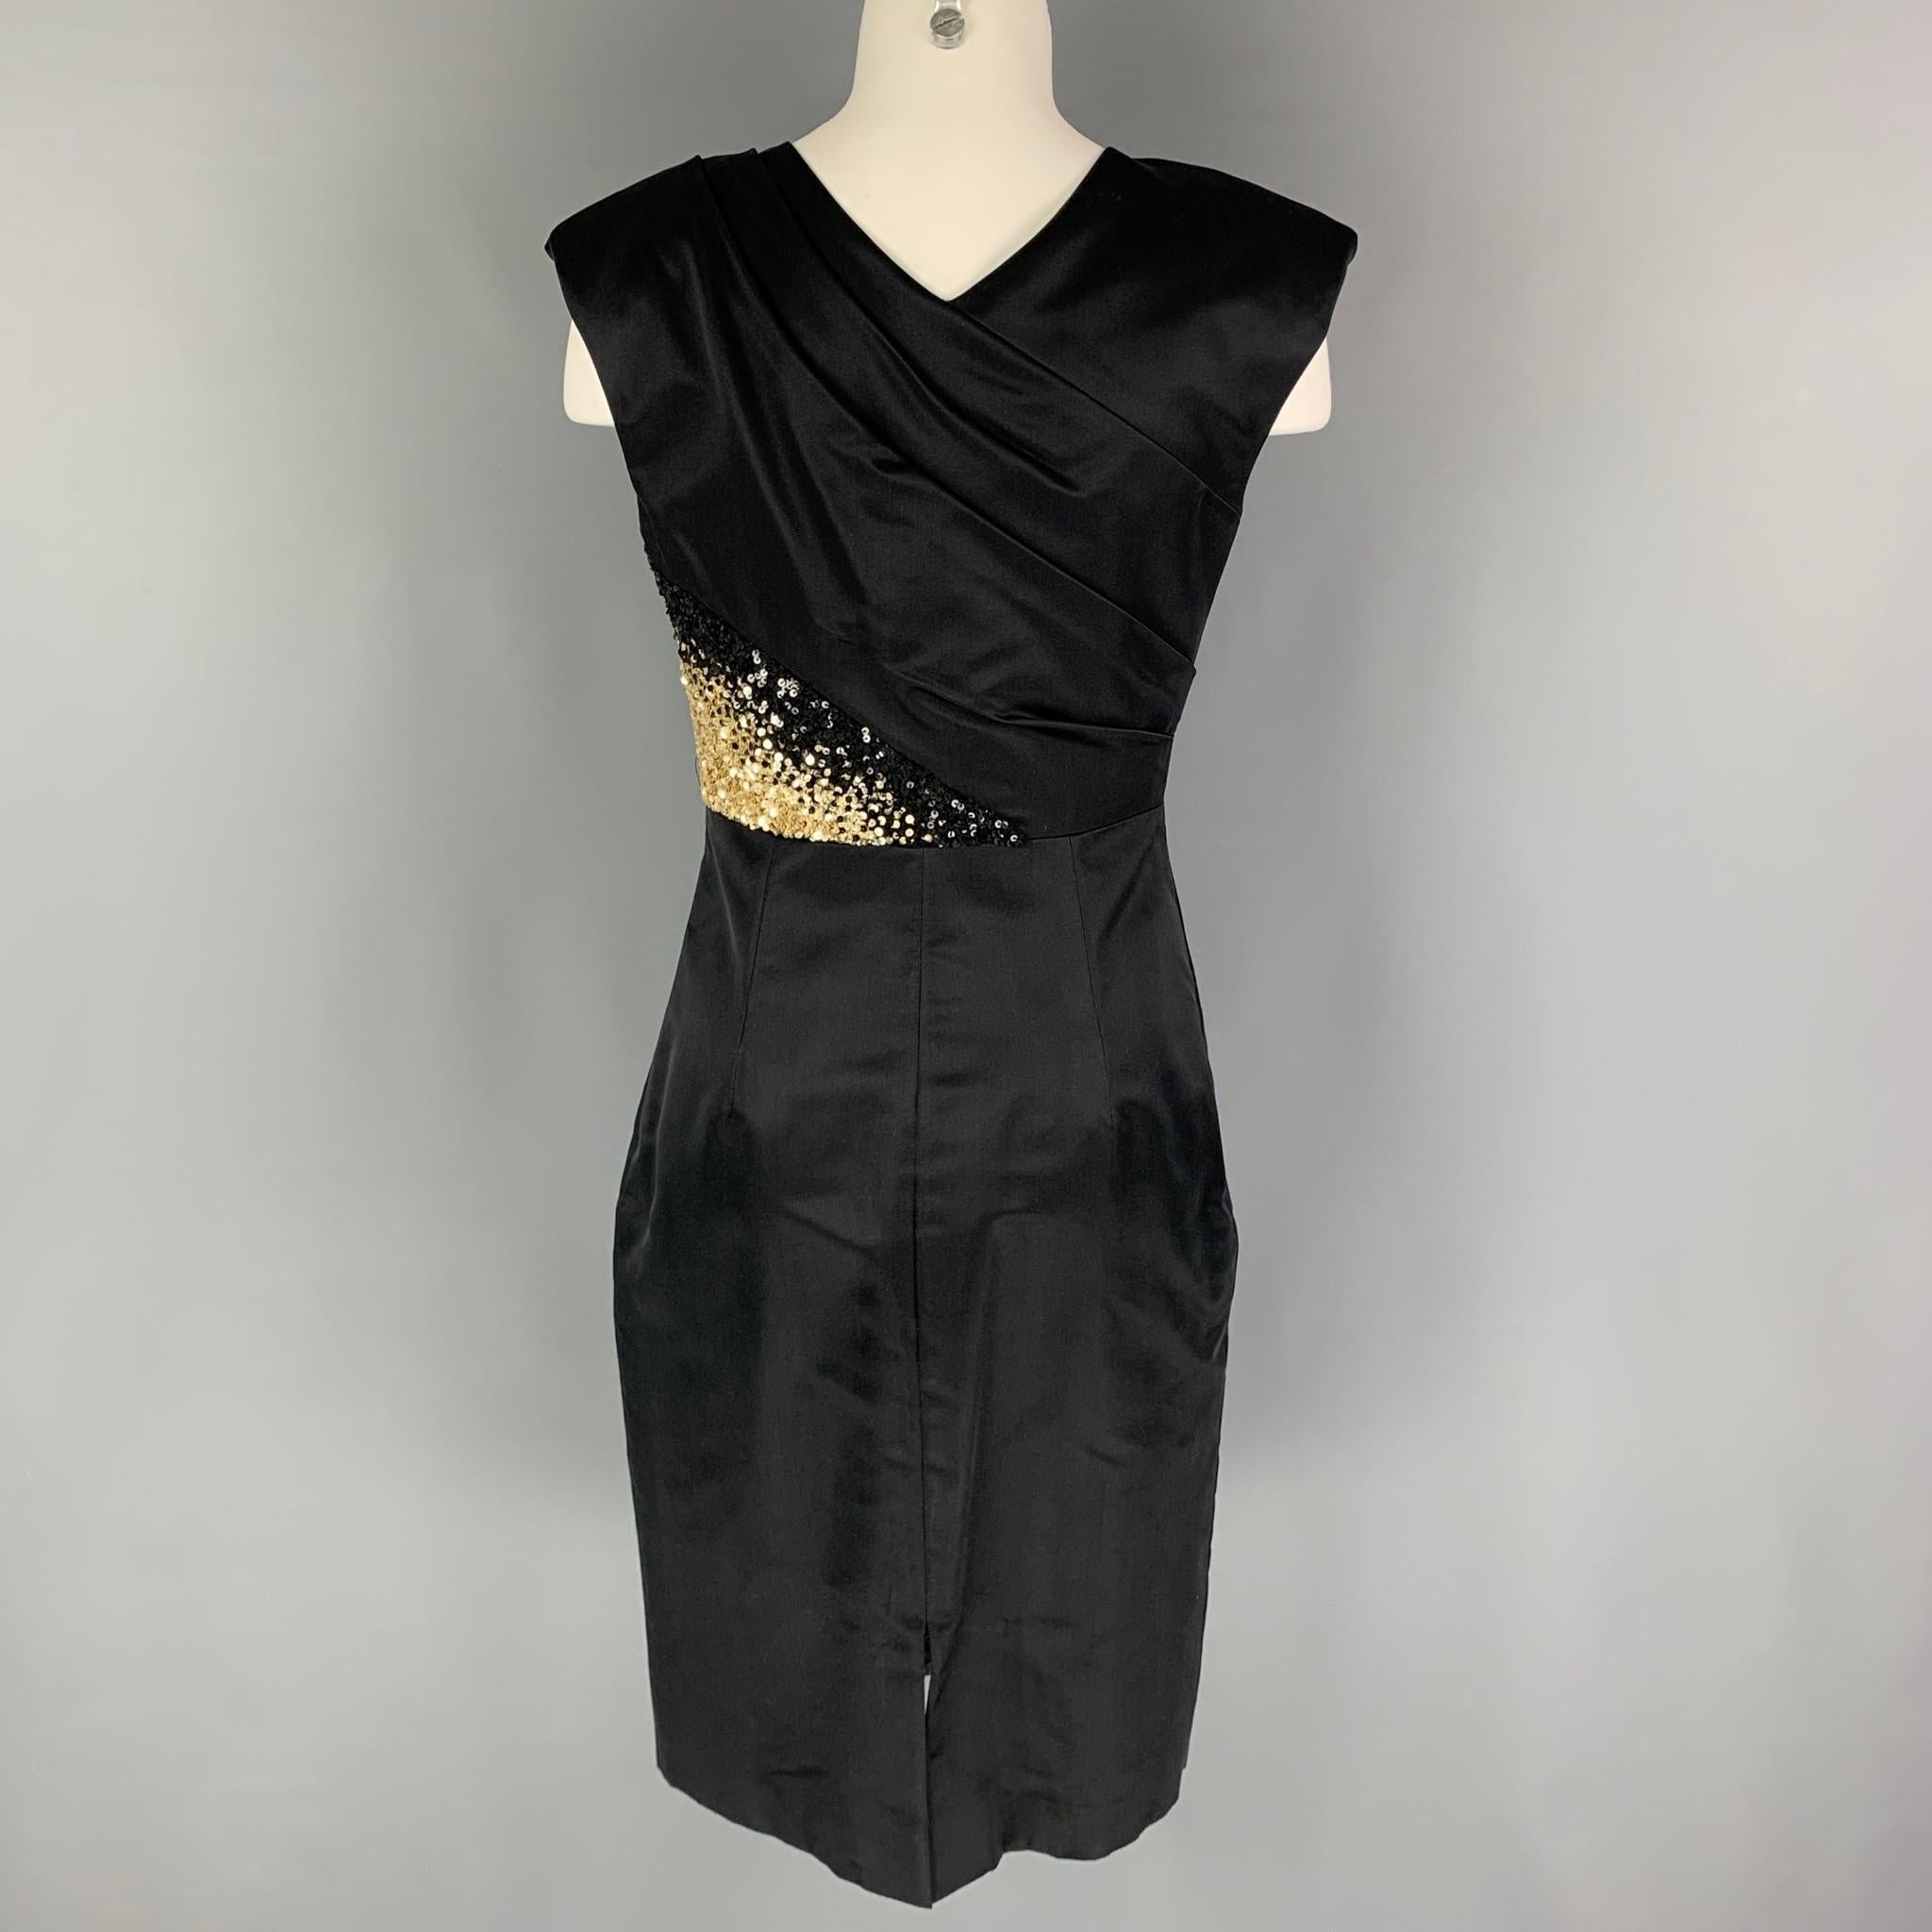 MONIQUE LHUILLIER Size 4 Black Gold Silk Rayon Sequined Cocktail Dress 1